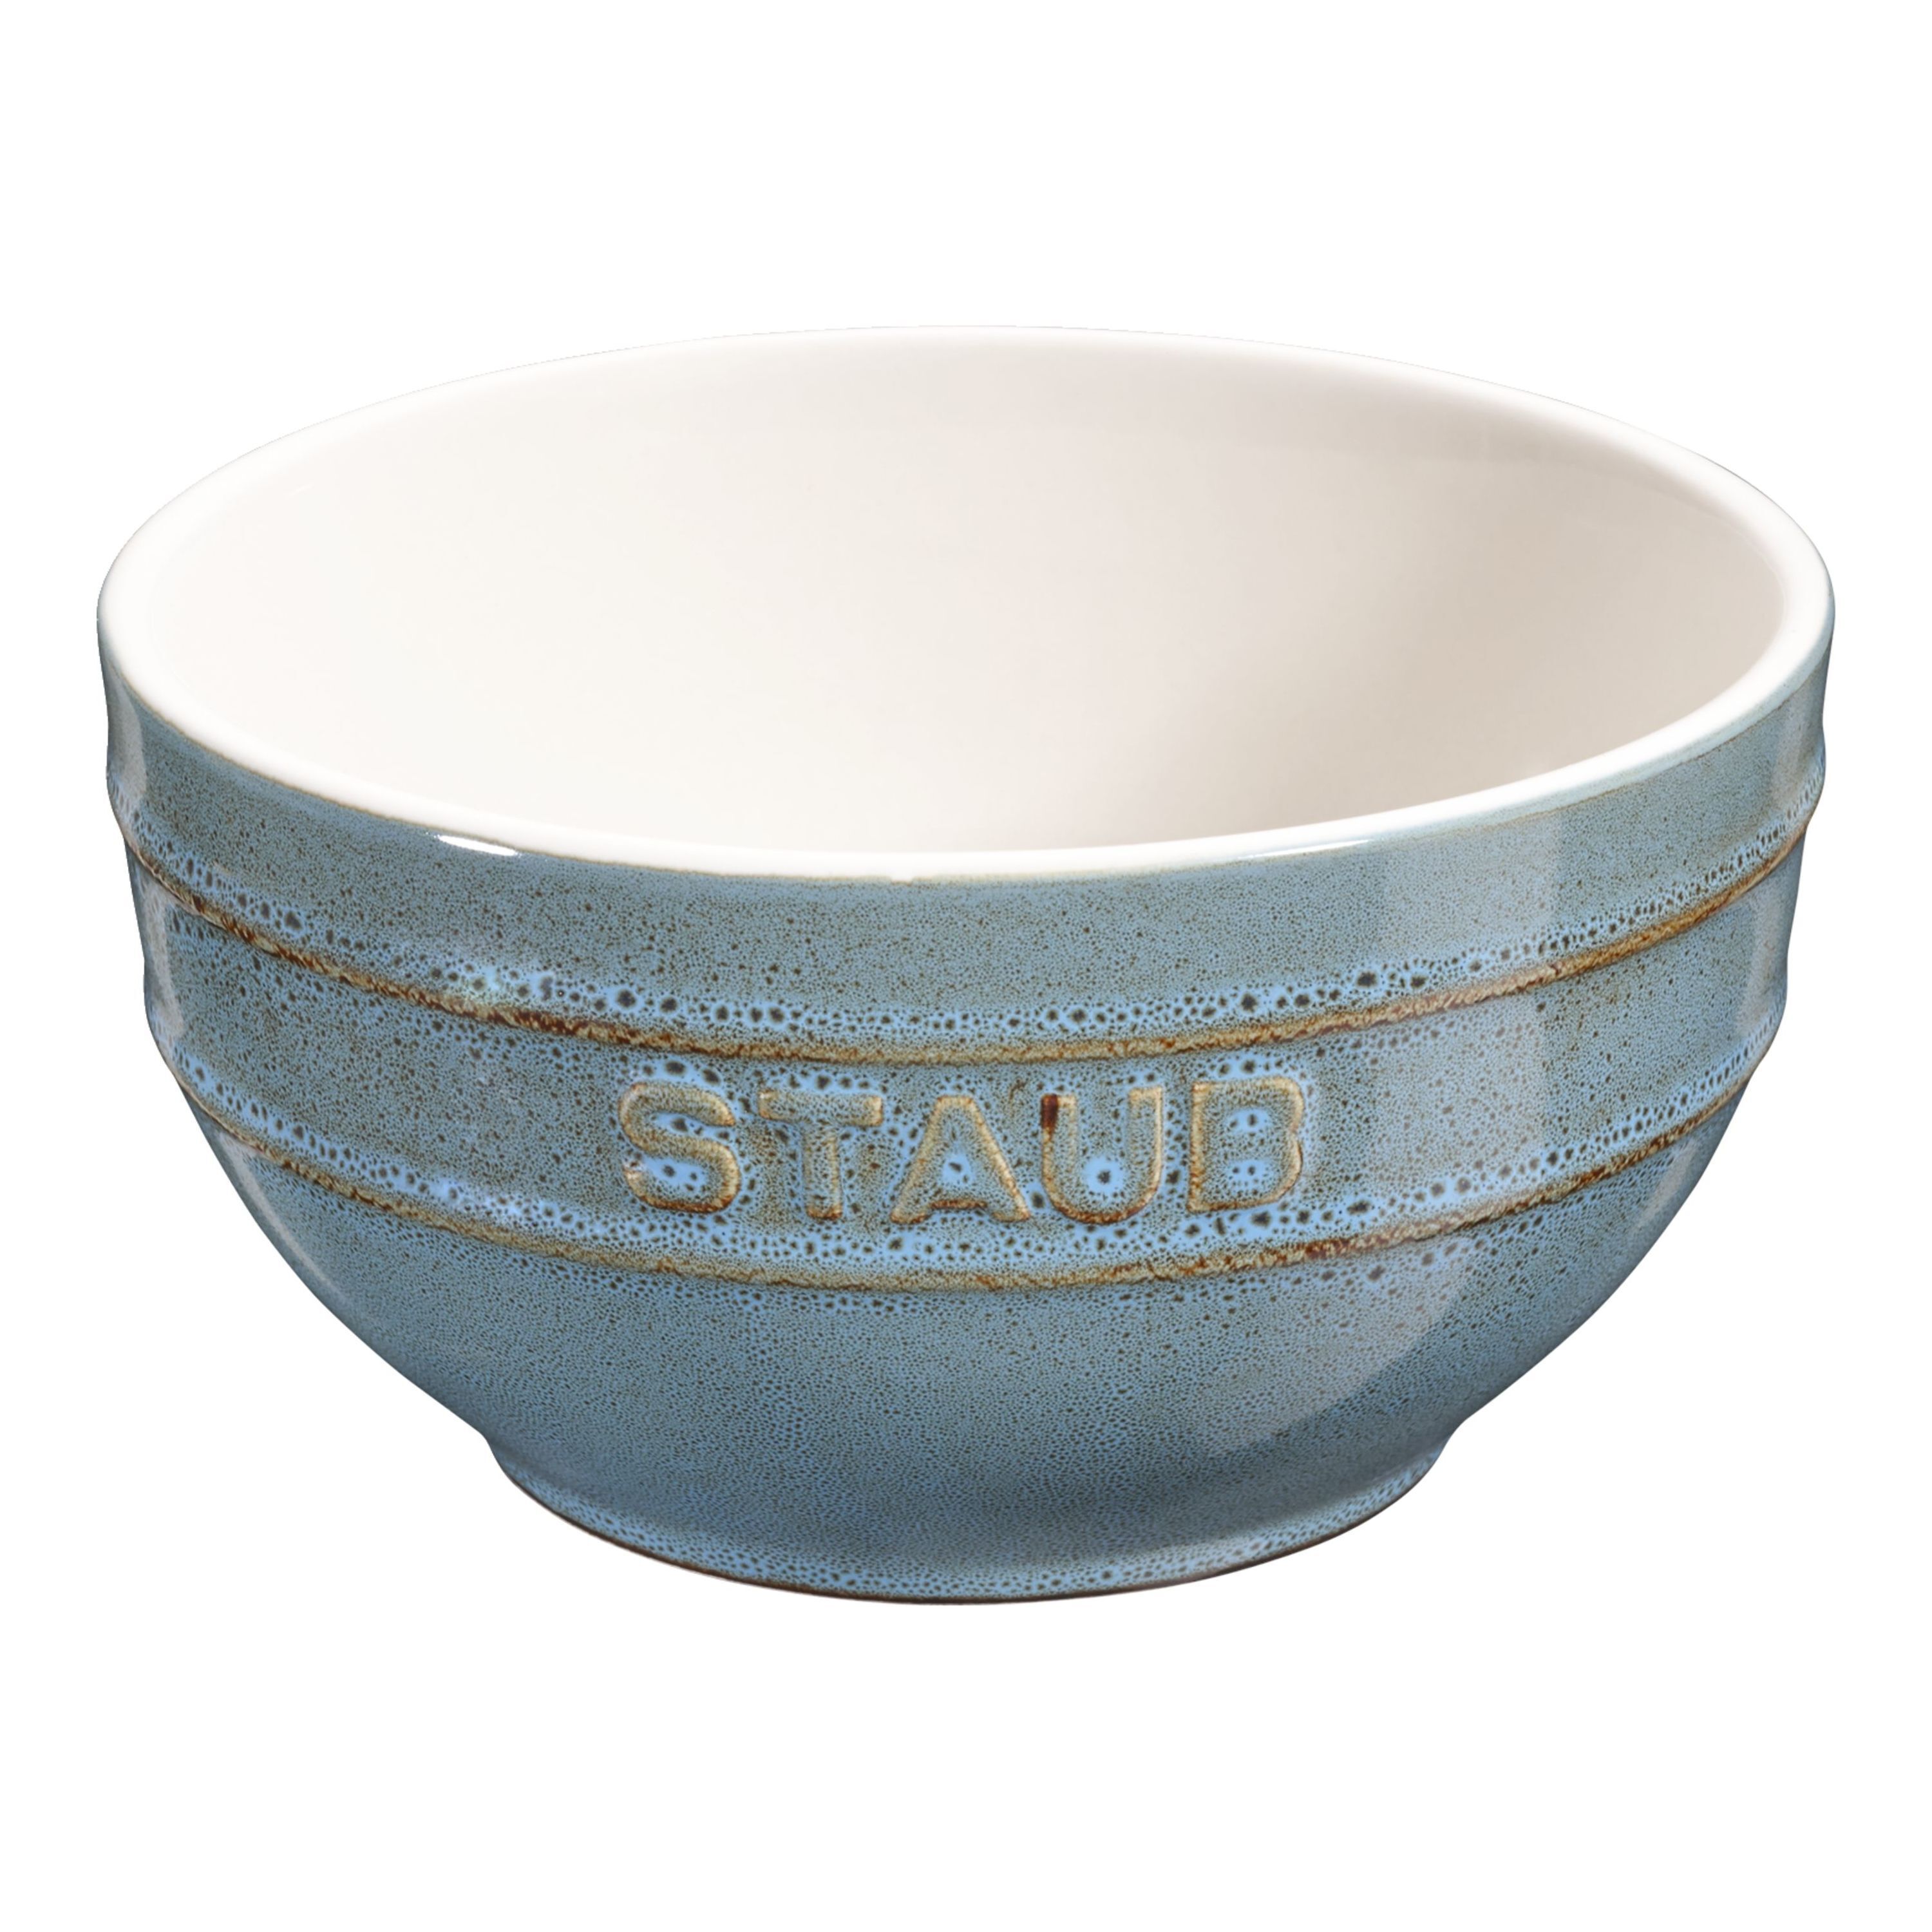 Staub Ceramique Ciotola rotonda - 12 cm, Colore turchese antico